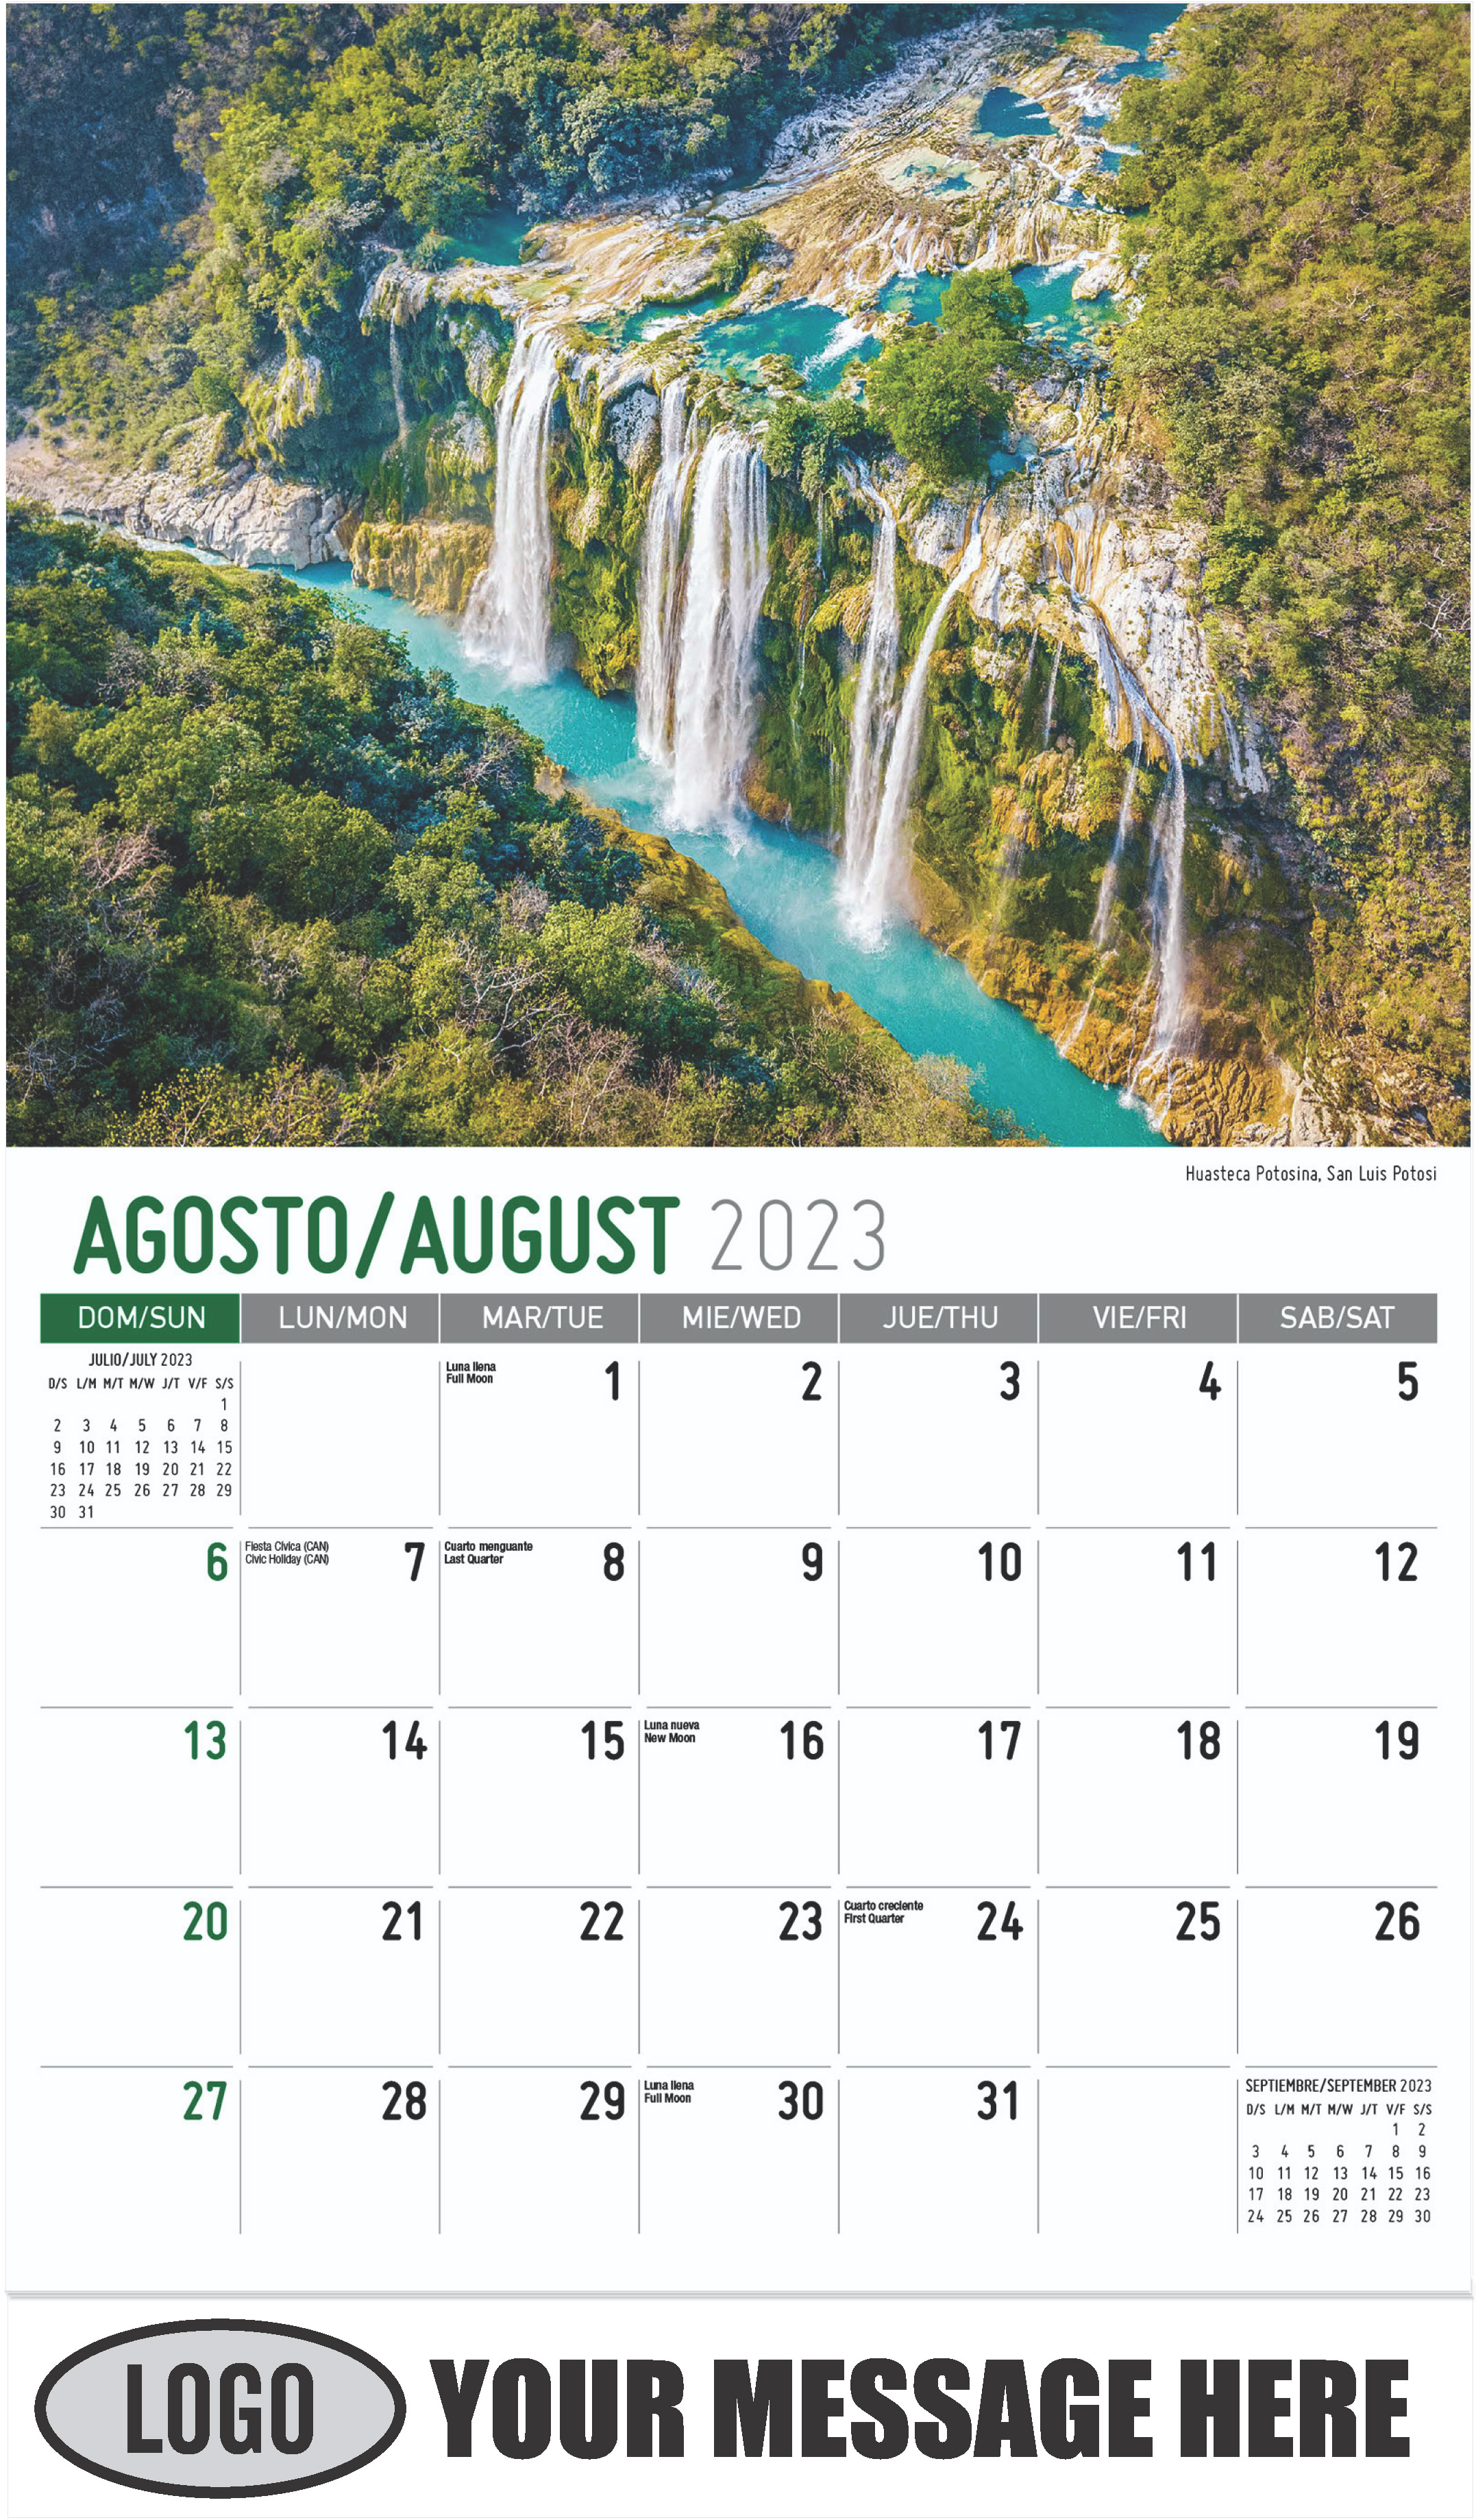 Huasteca Potosina, San Luis Potosi - August - Scenes of Mexico (Spanish-English bilingual) 2023 Promotional Calendar